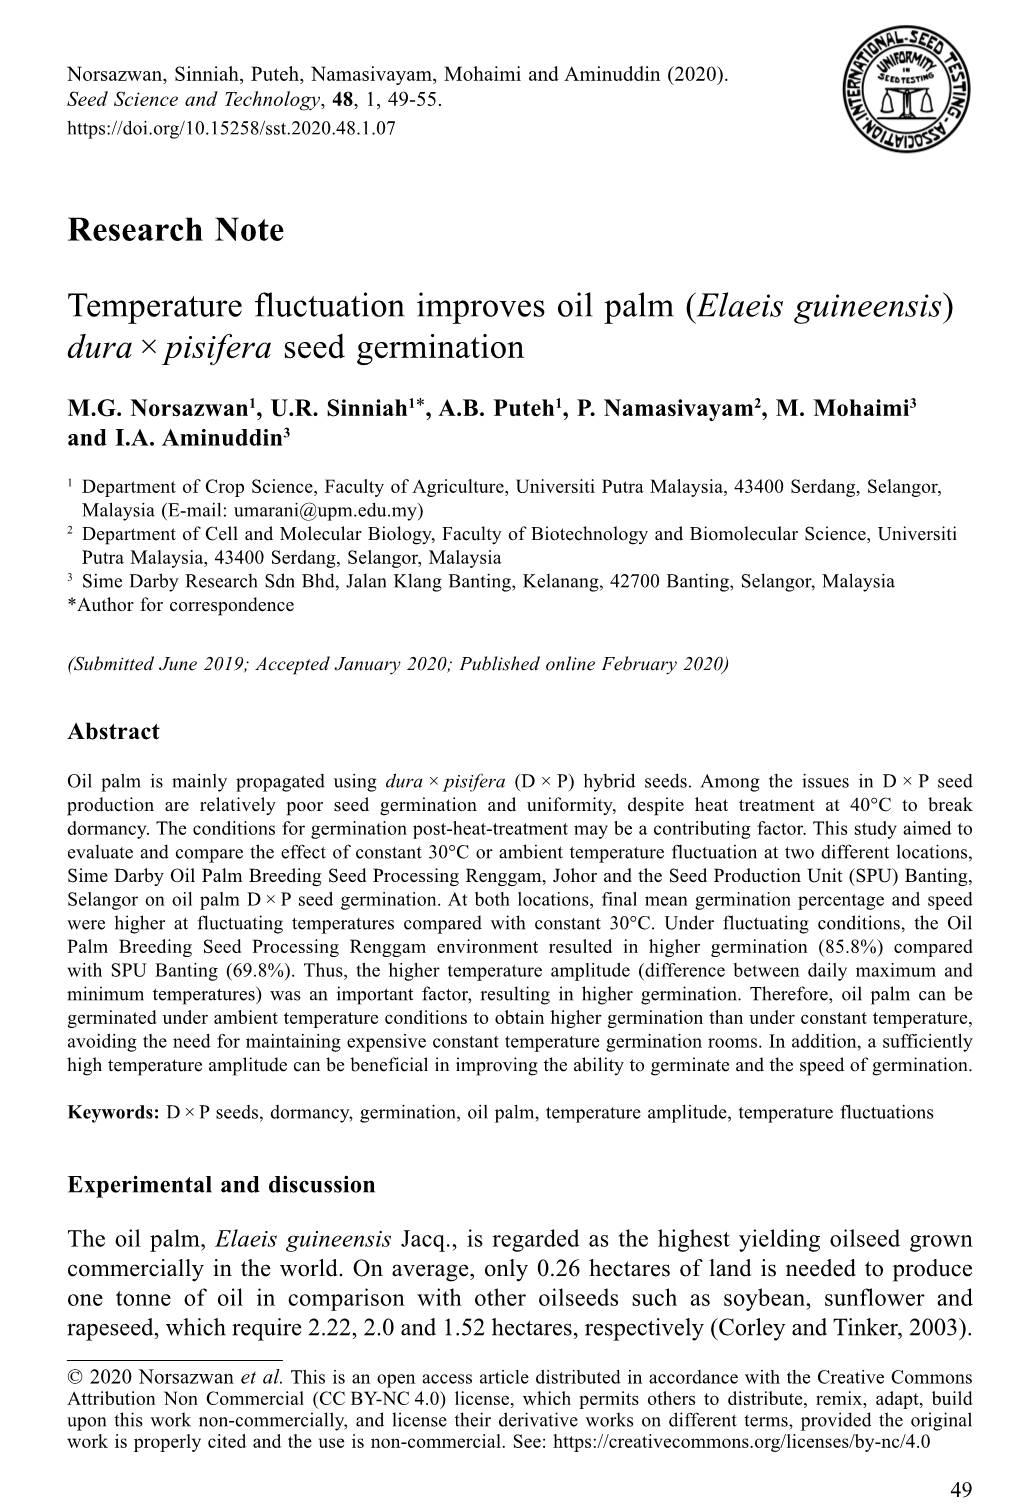 Temperature Fluctuation Improves Oil Palm (&lt;I&gt;Elaeis Guineensis&lt;/I&gt;)